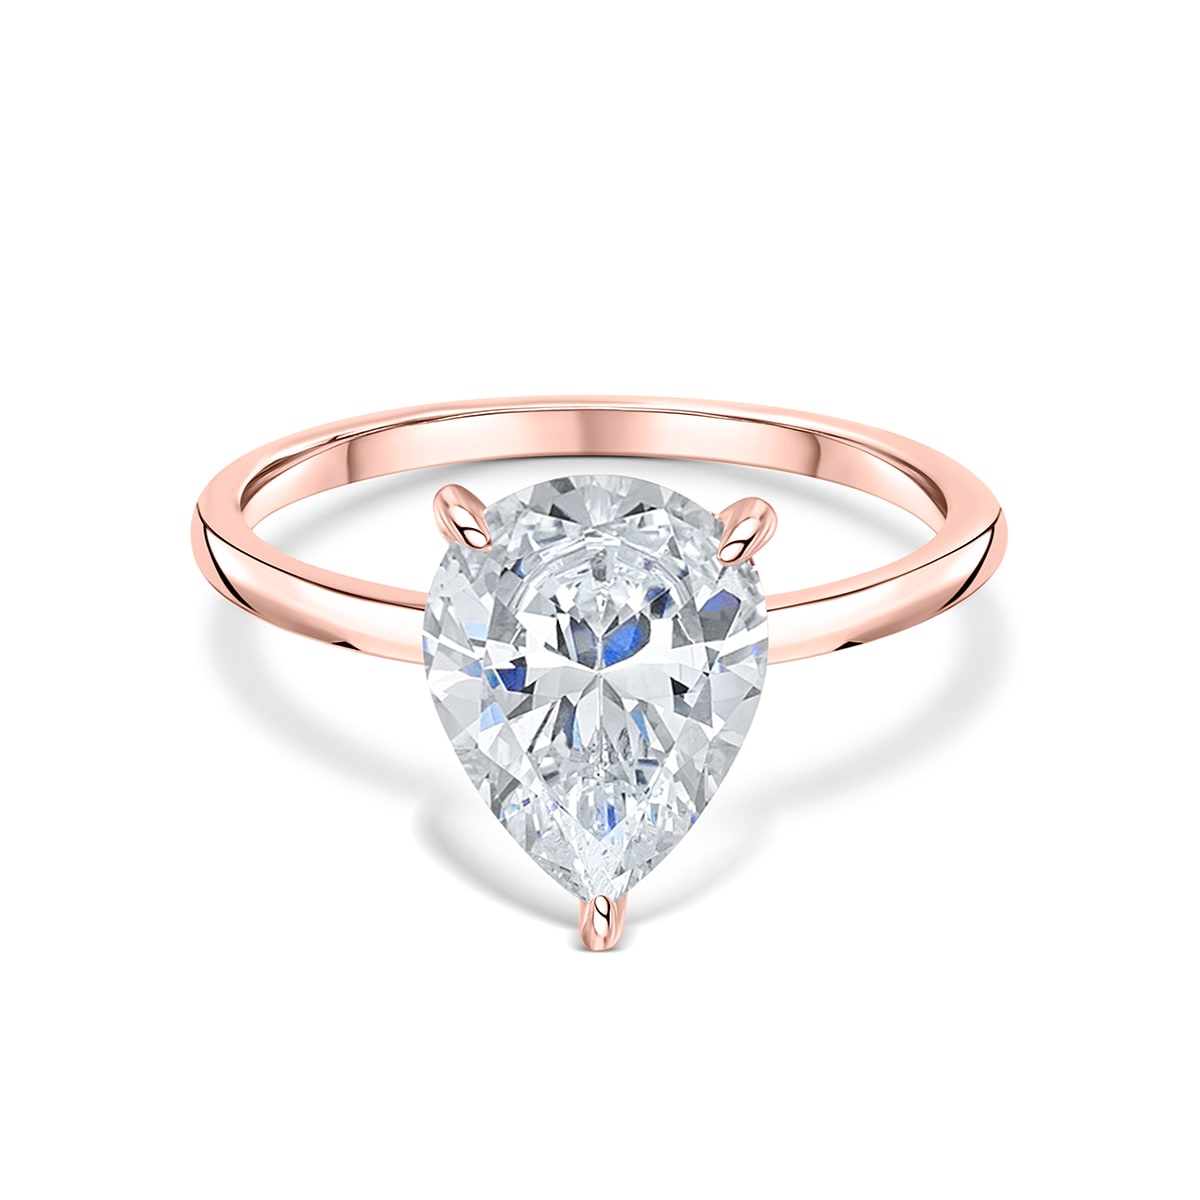 Rose gold 3 carat pear engagement ring